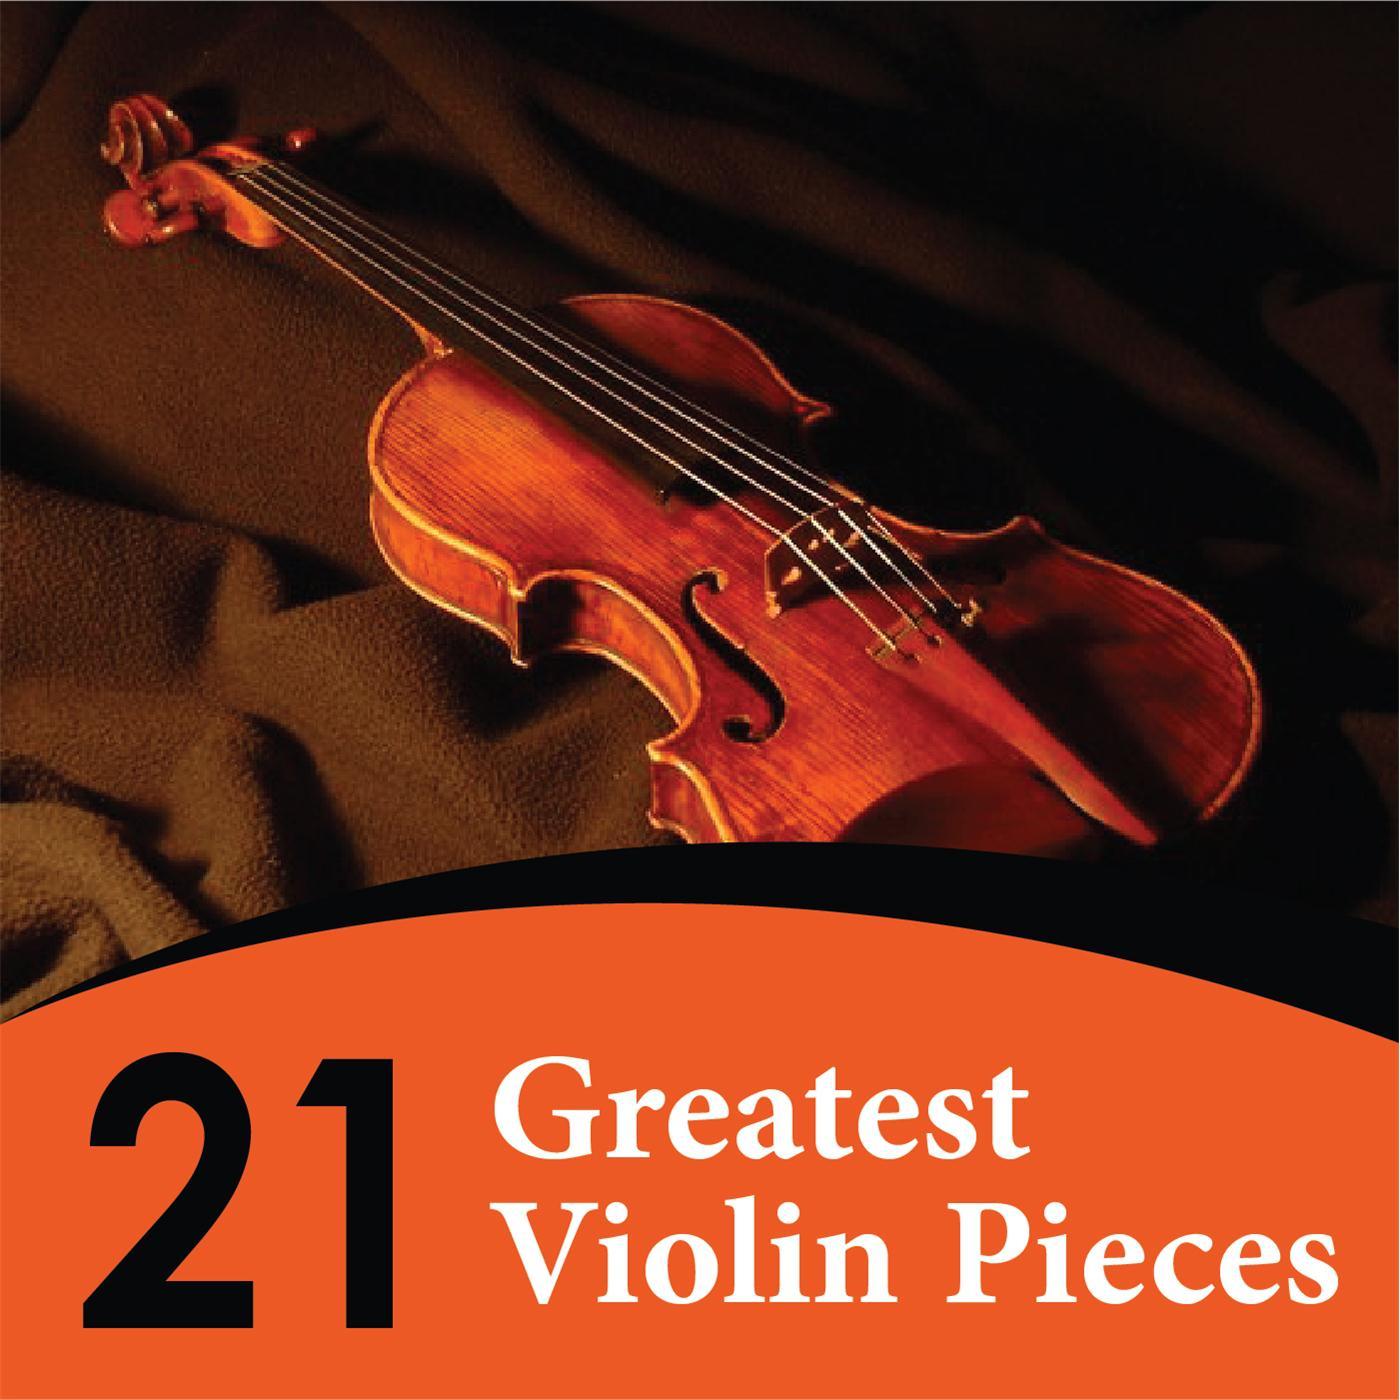 Violin Concerto in F Major, Op. 8, No. 3, Rv 293, "Autumn": I. Allegro